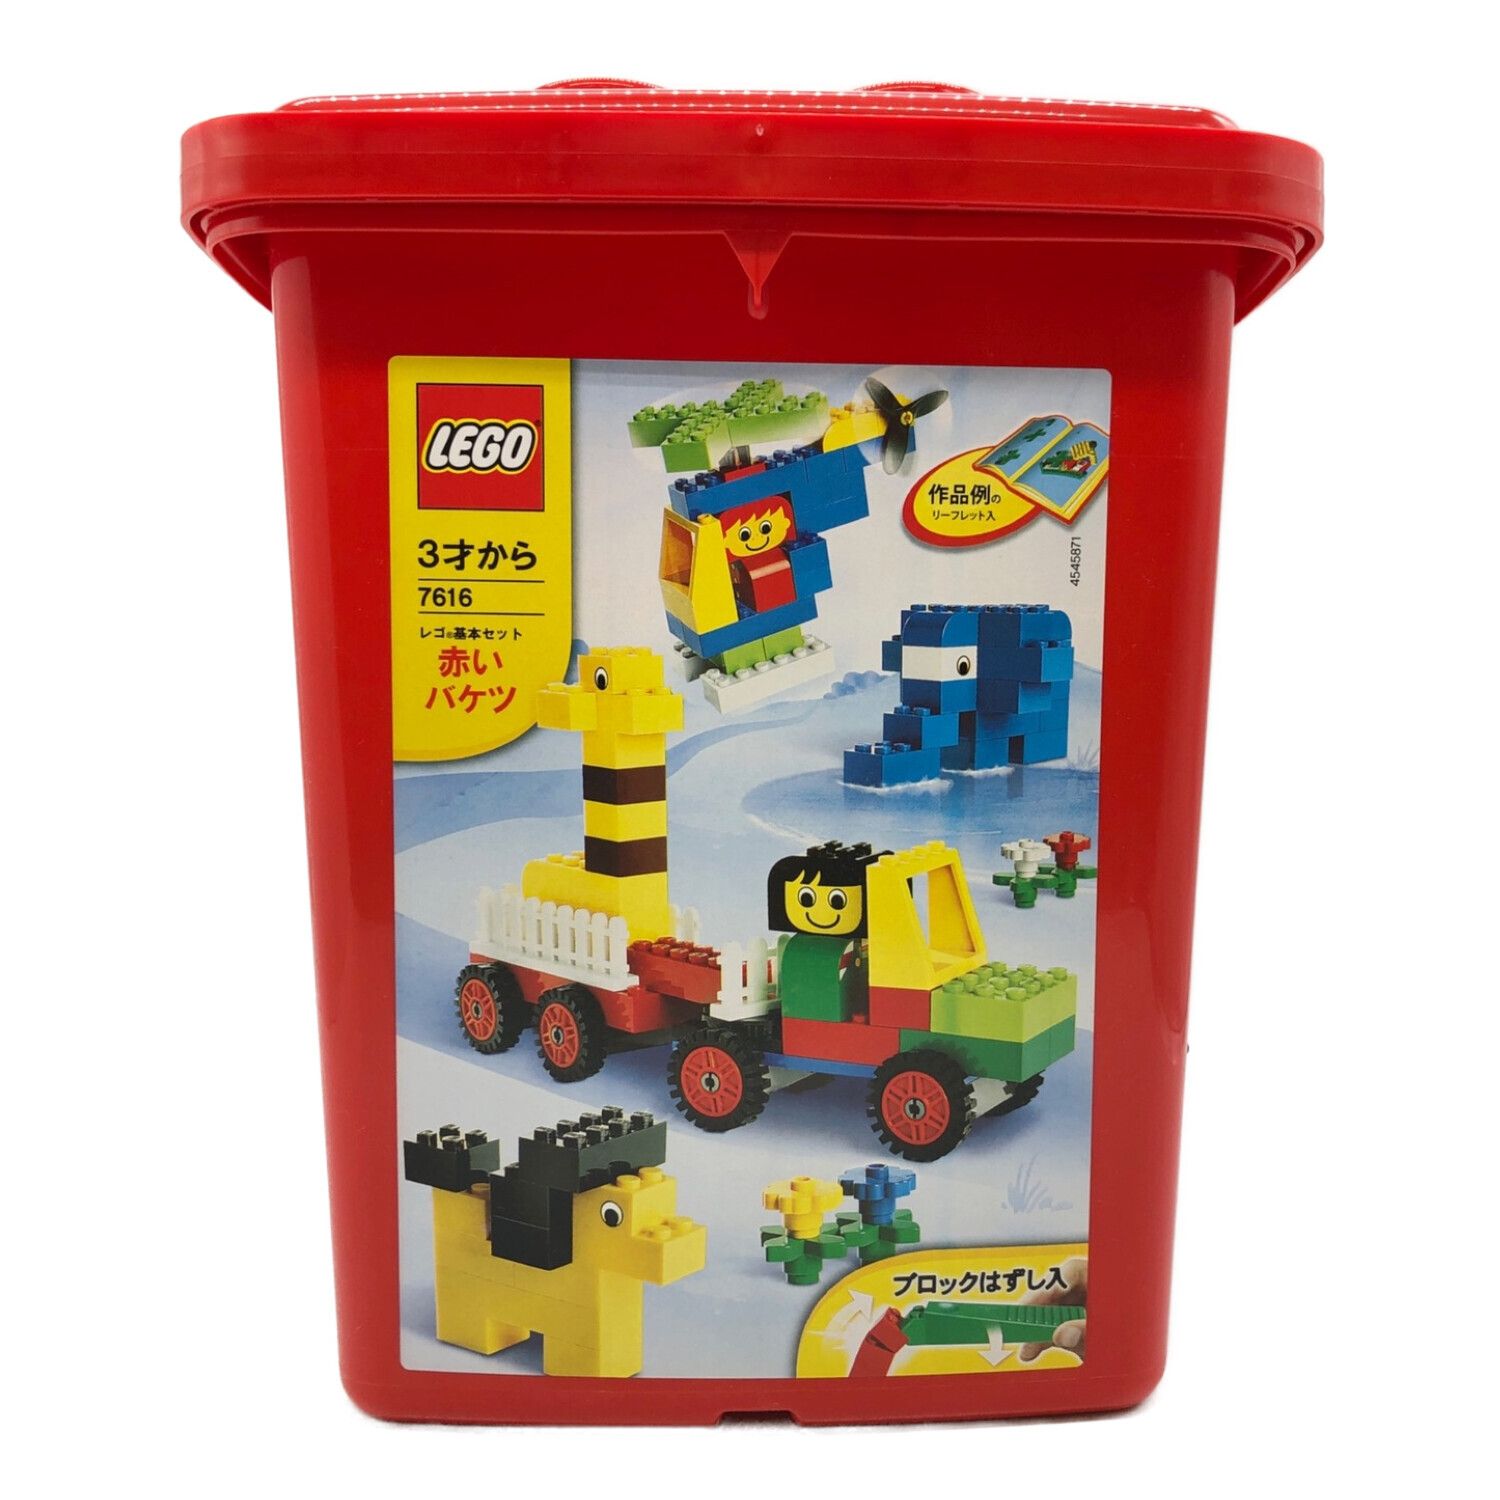 LEGO 赤いバケツ 未使用品 7616 - メルカリ